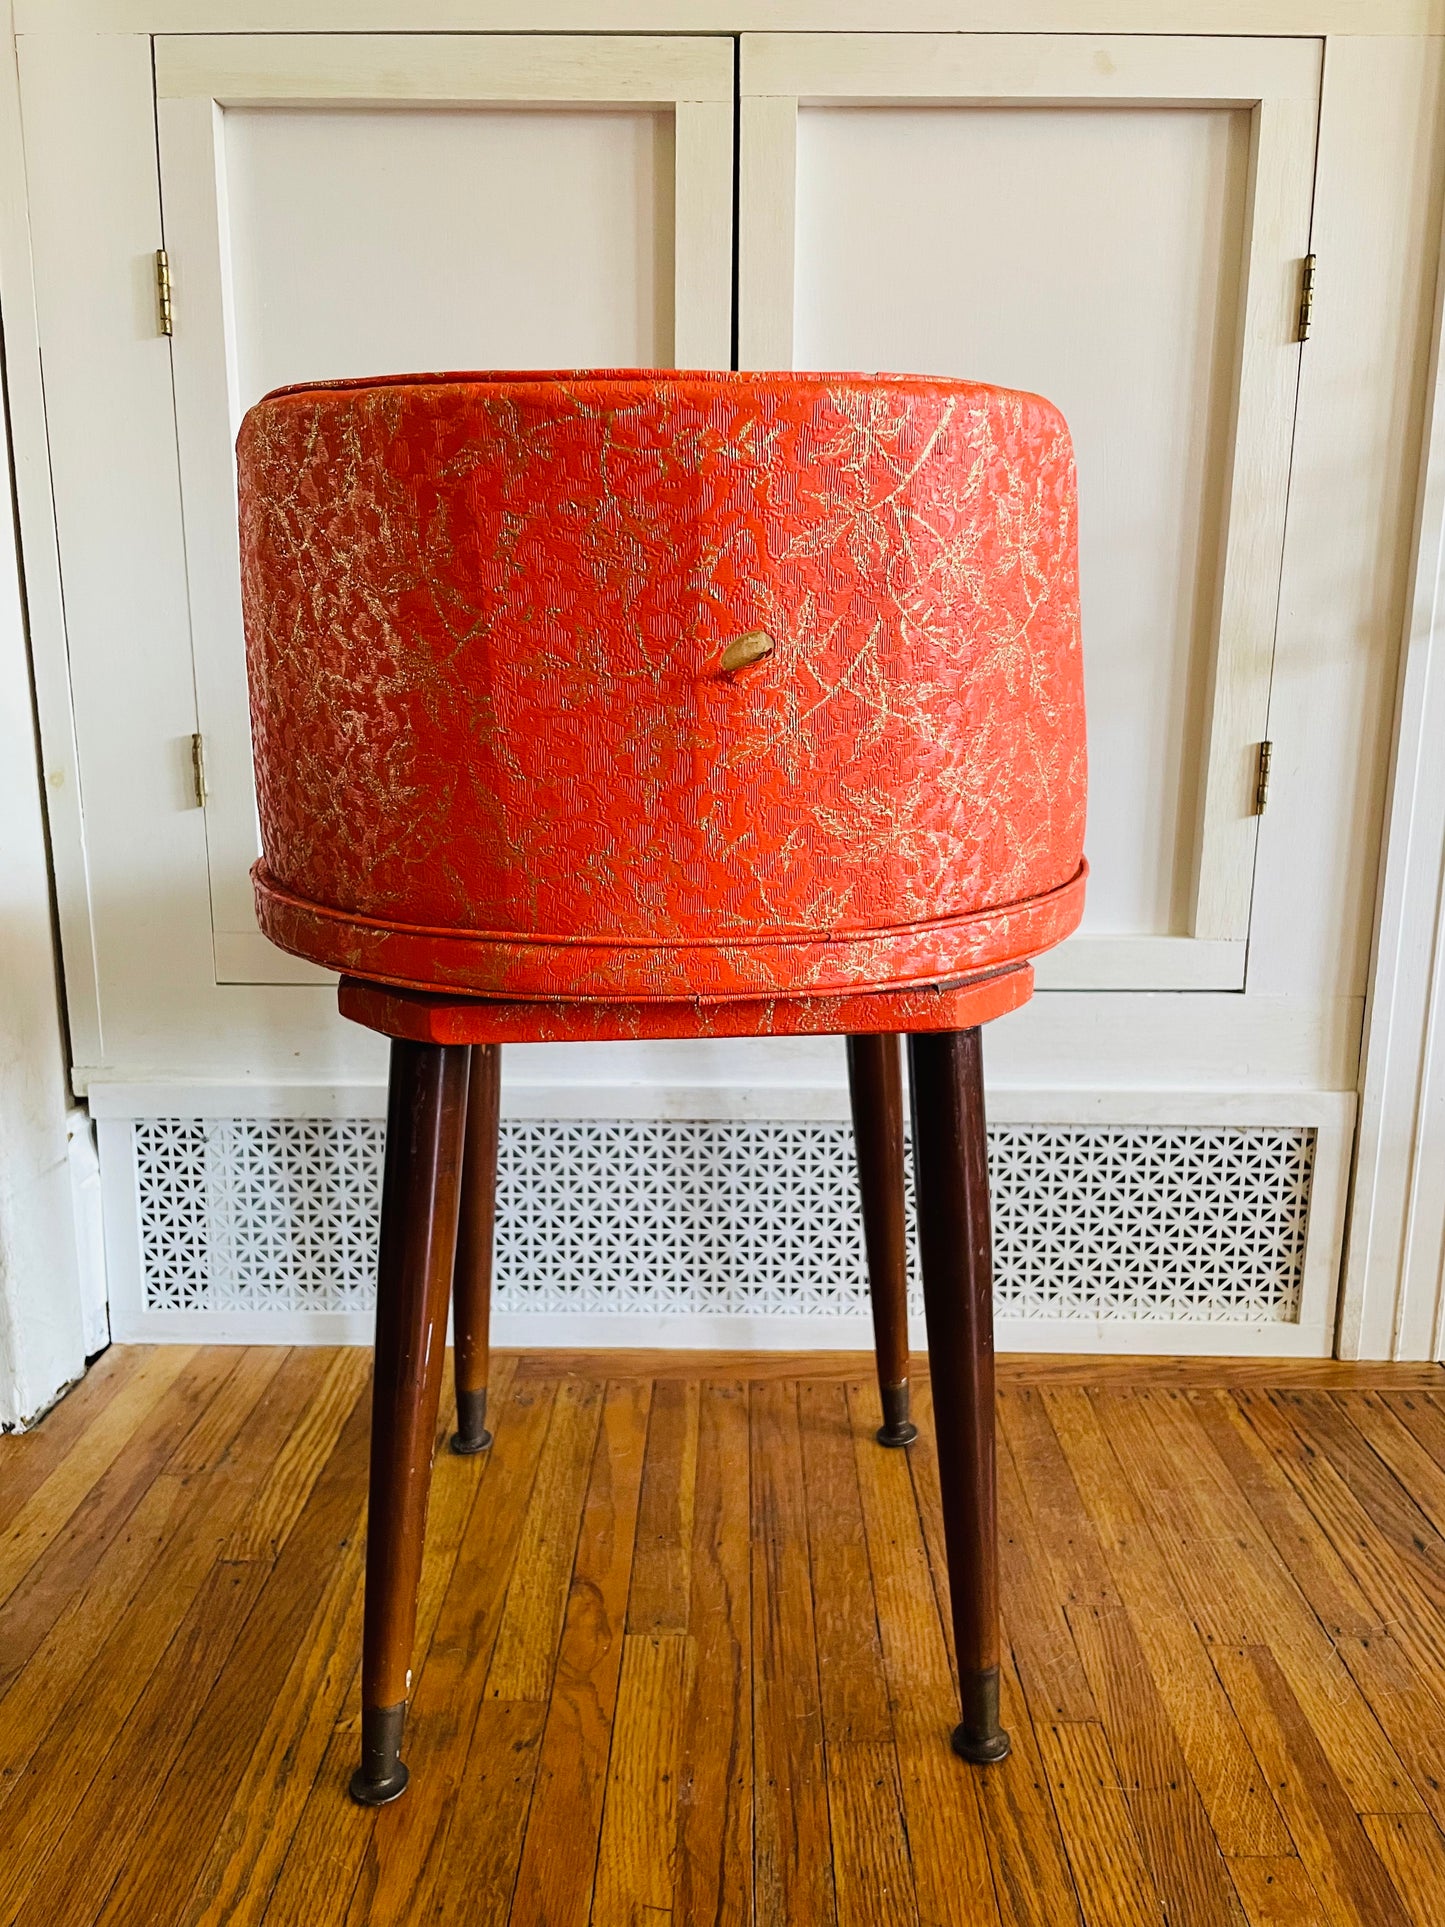 Mid-Century Modern Short Stool Chair with Orange Fabric & Gold Print - Swivels 360 Degrees!